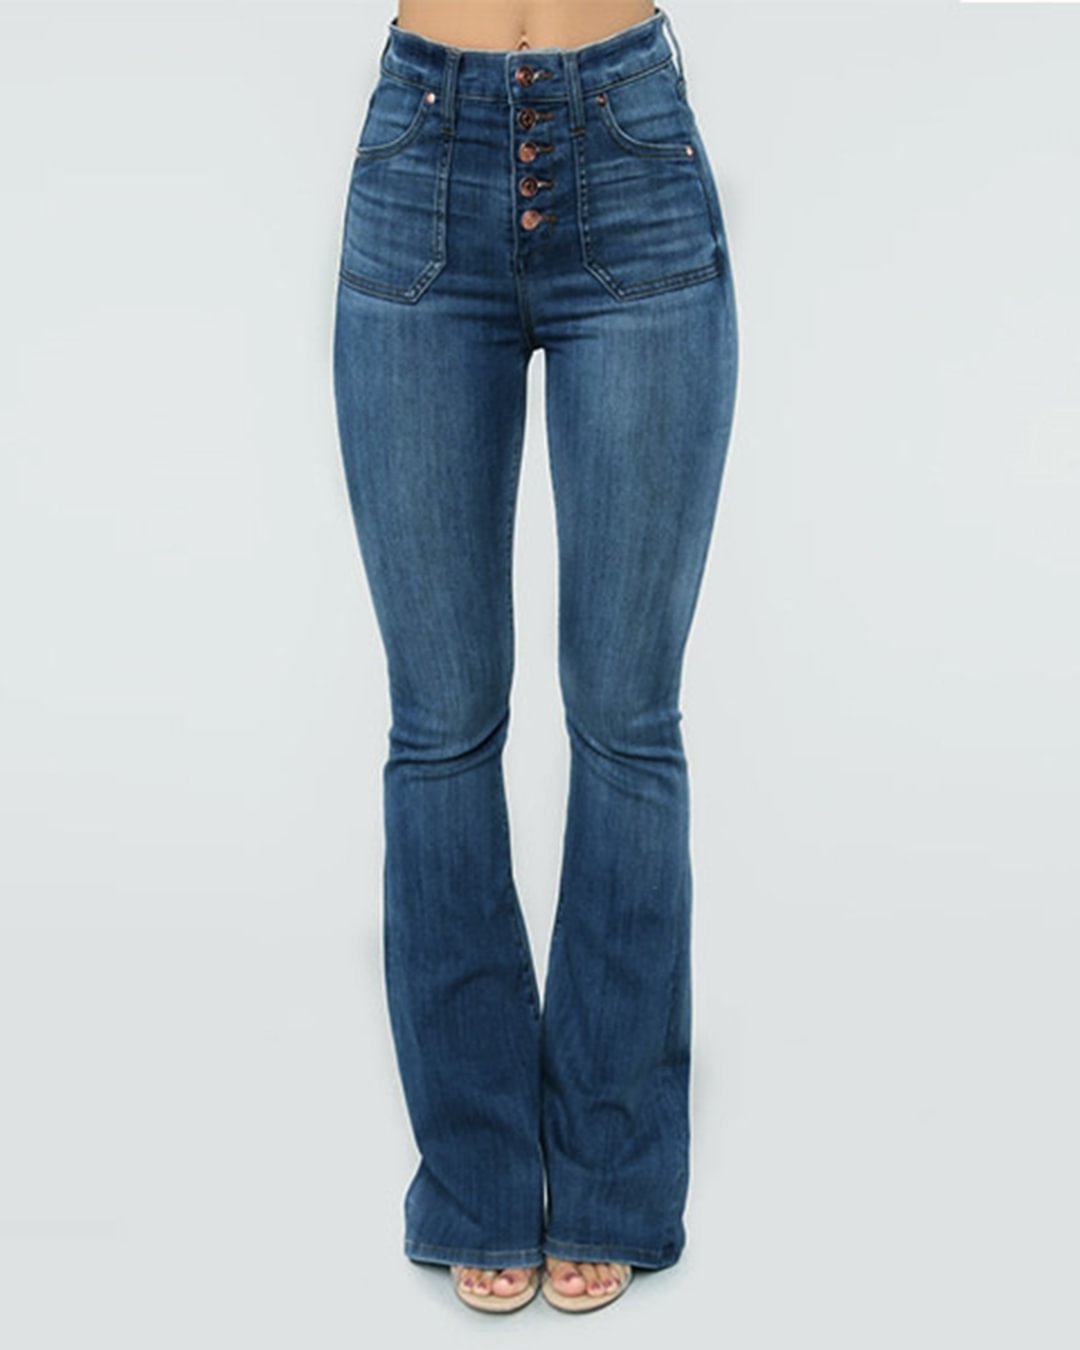 Fashionv-Retro Style Low-rise Flared Jeans